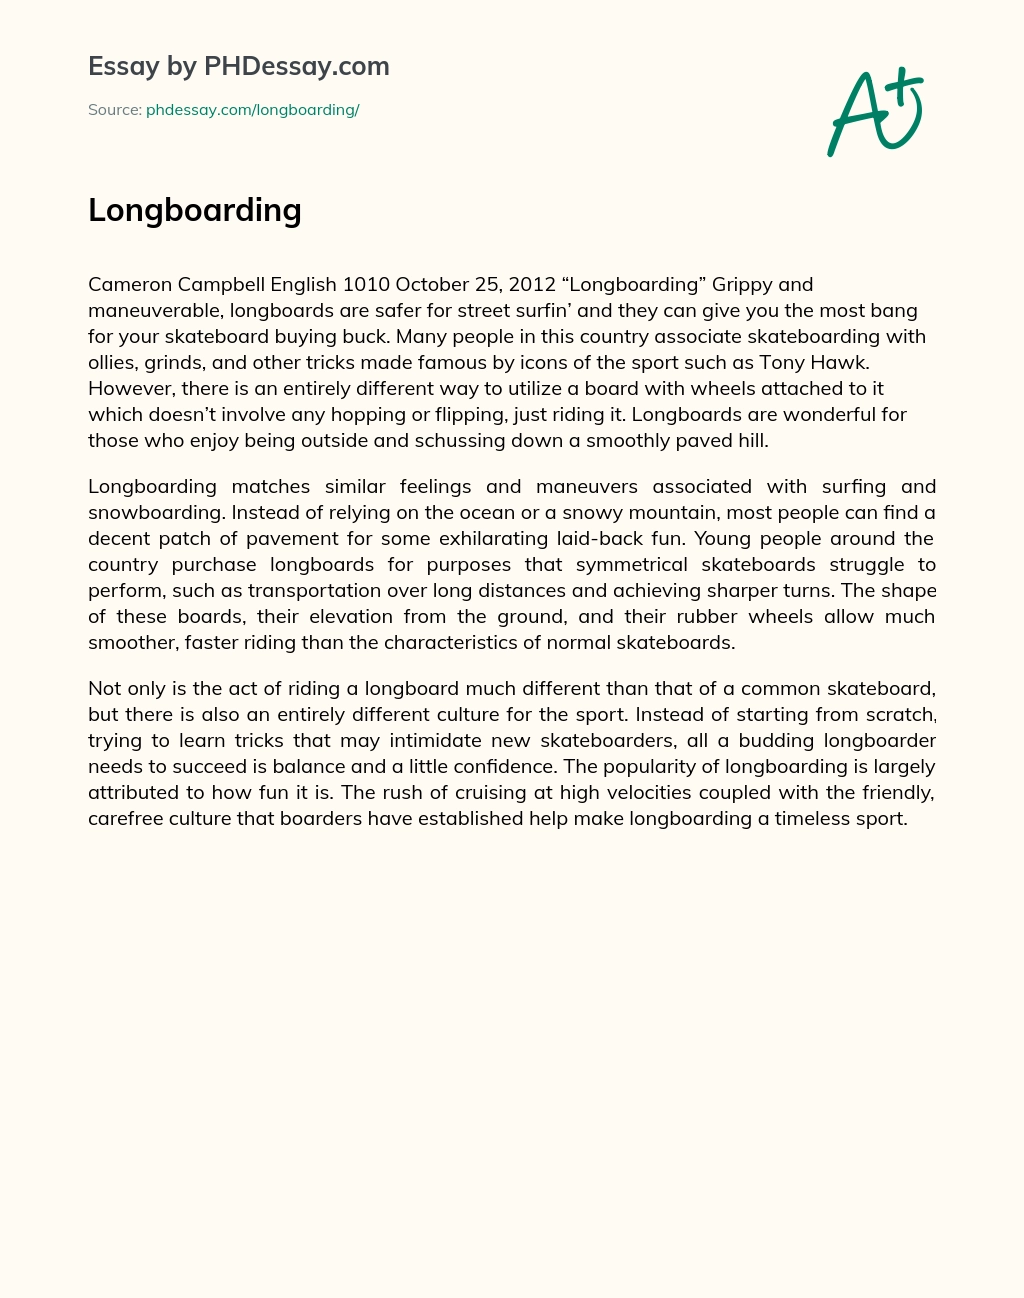 Longboarding: A Safer essay